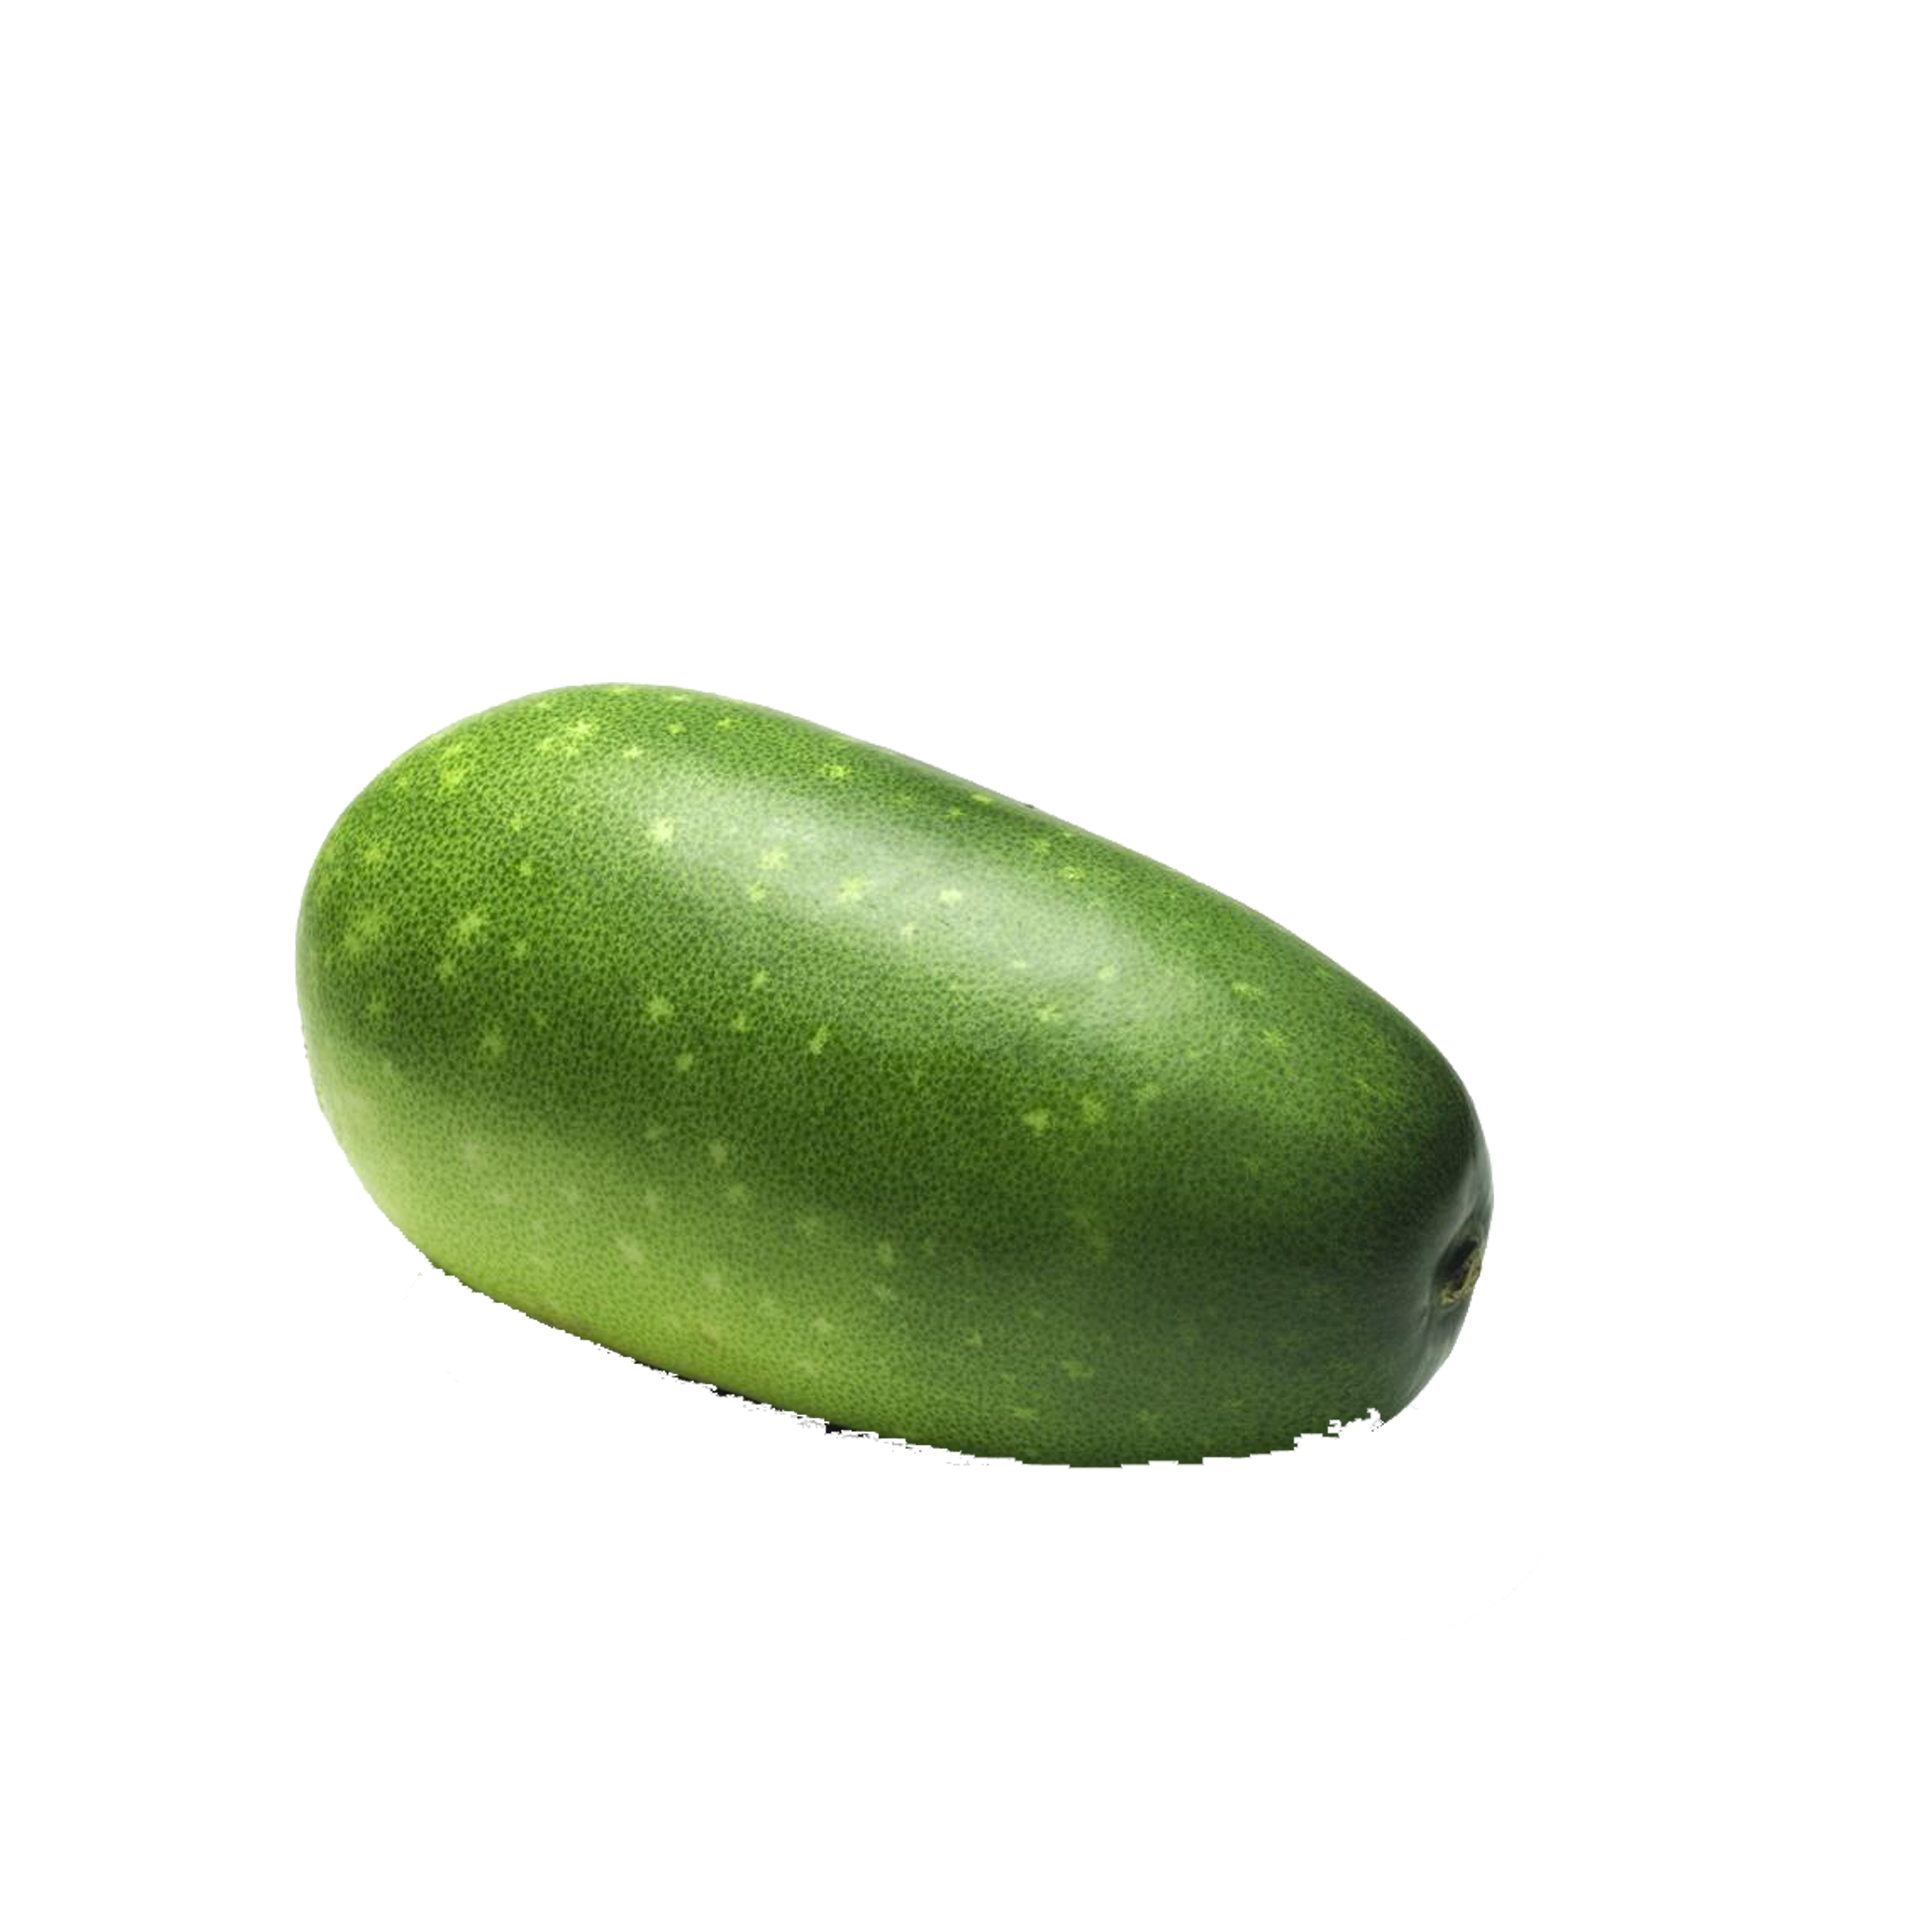 Cucumber cantaloupe wax melon. Watermelon clipart bitter gourd